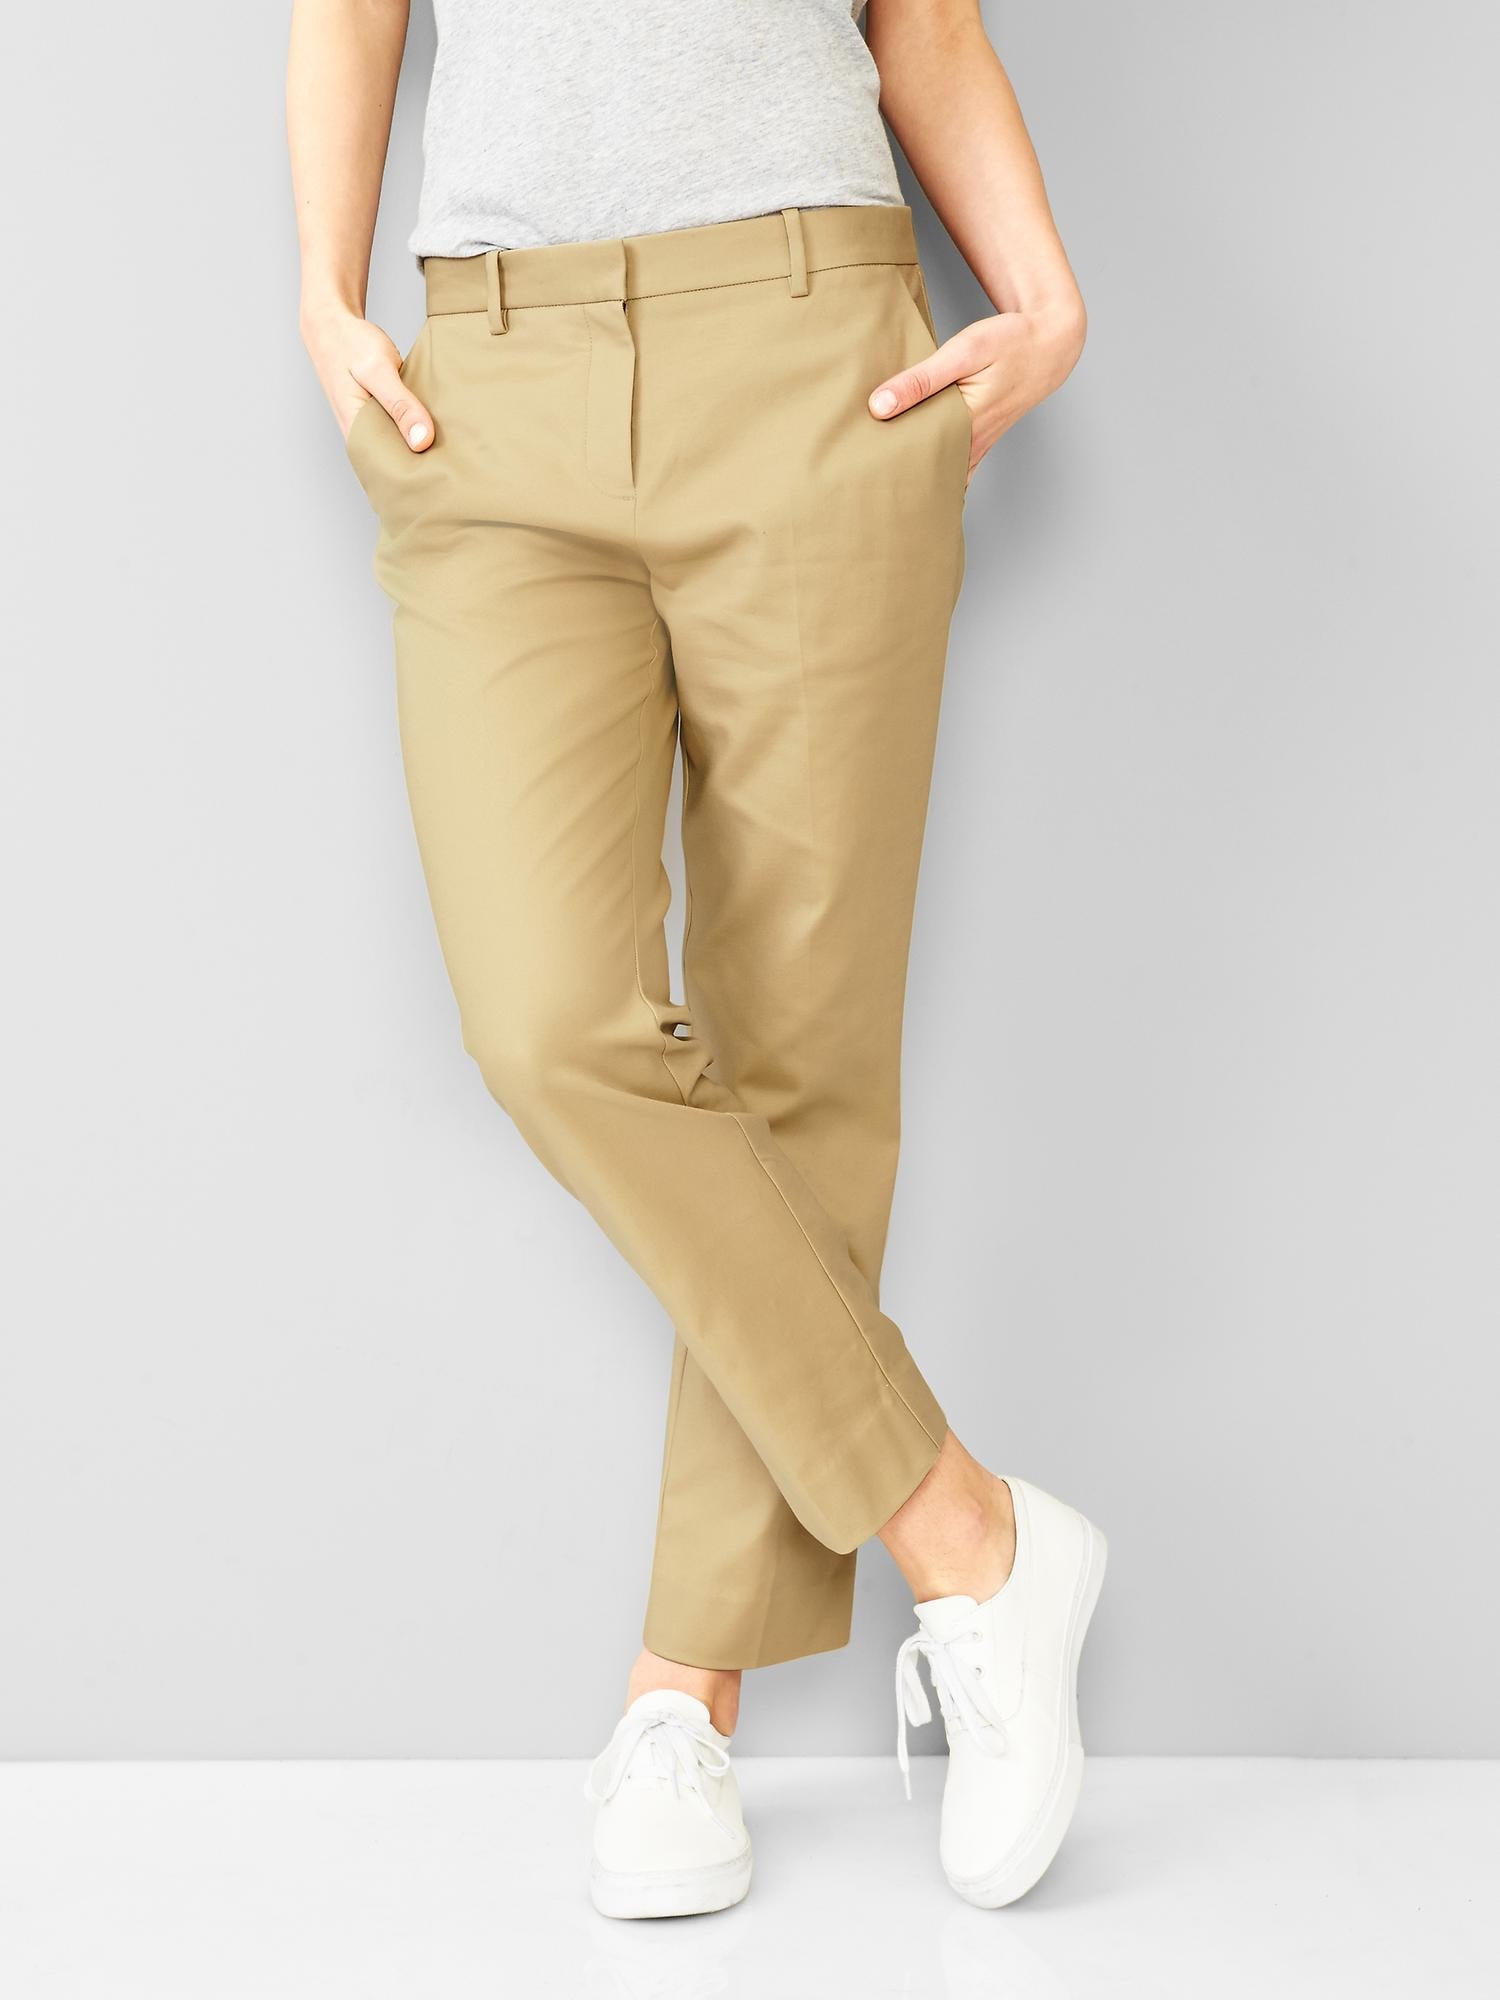 Tailored crop pants